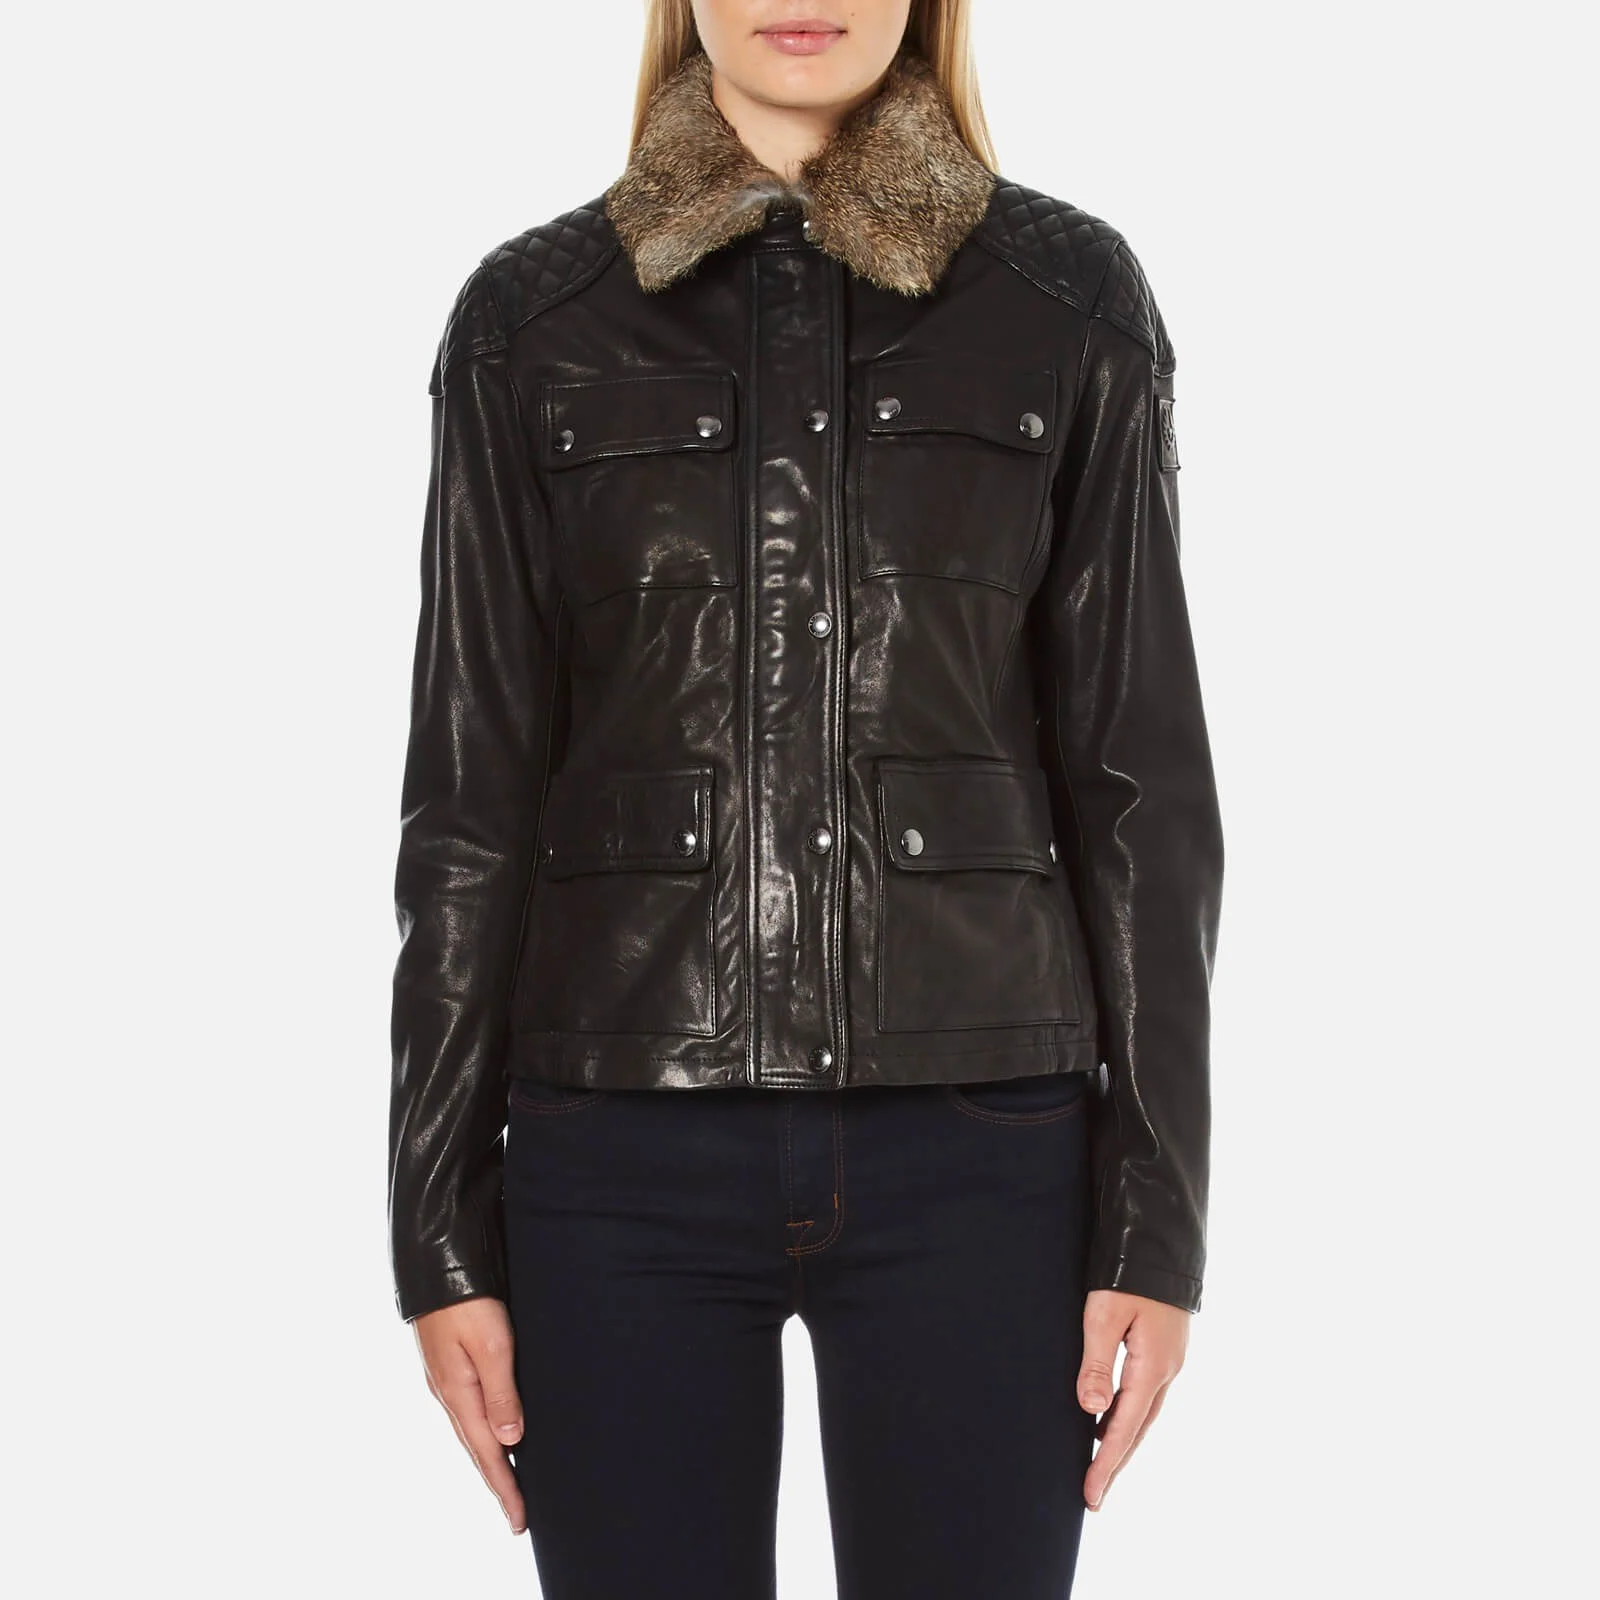 Belstaff Women's Attebury Leather Jacket - Black Image 1